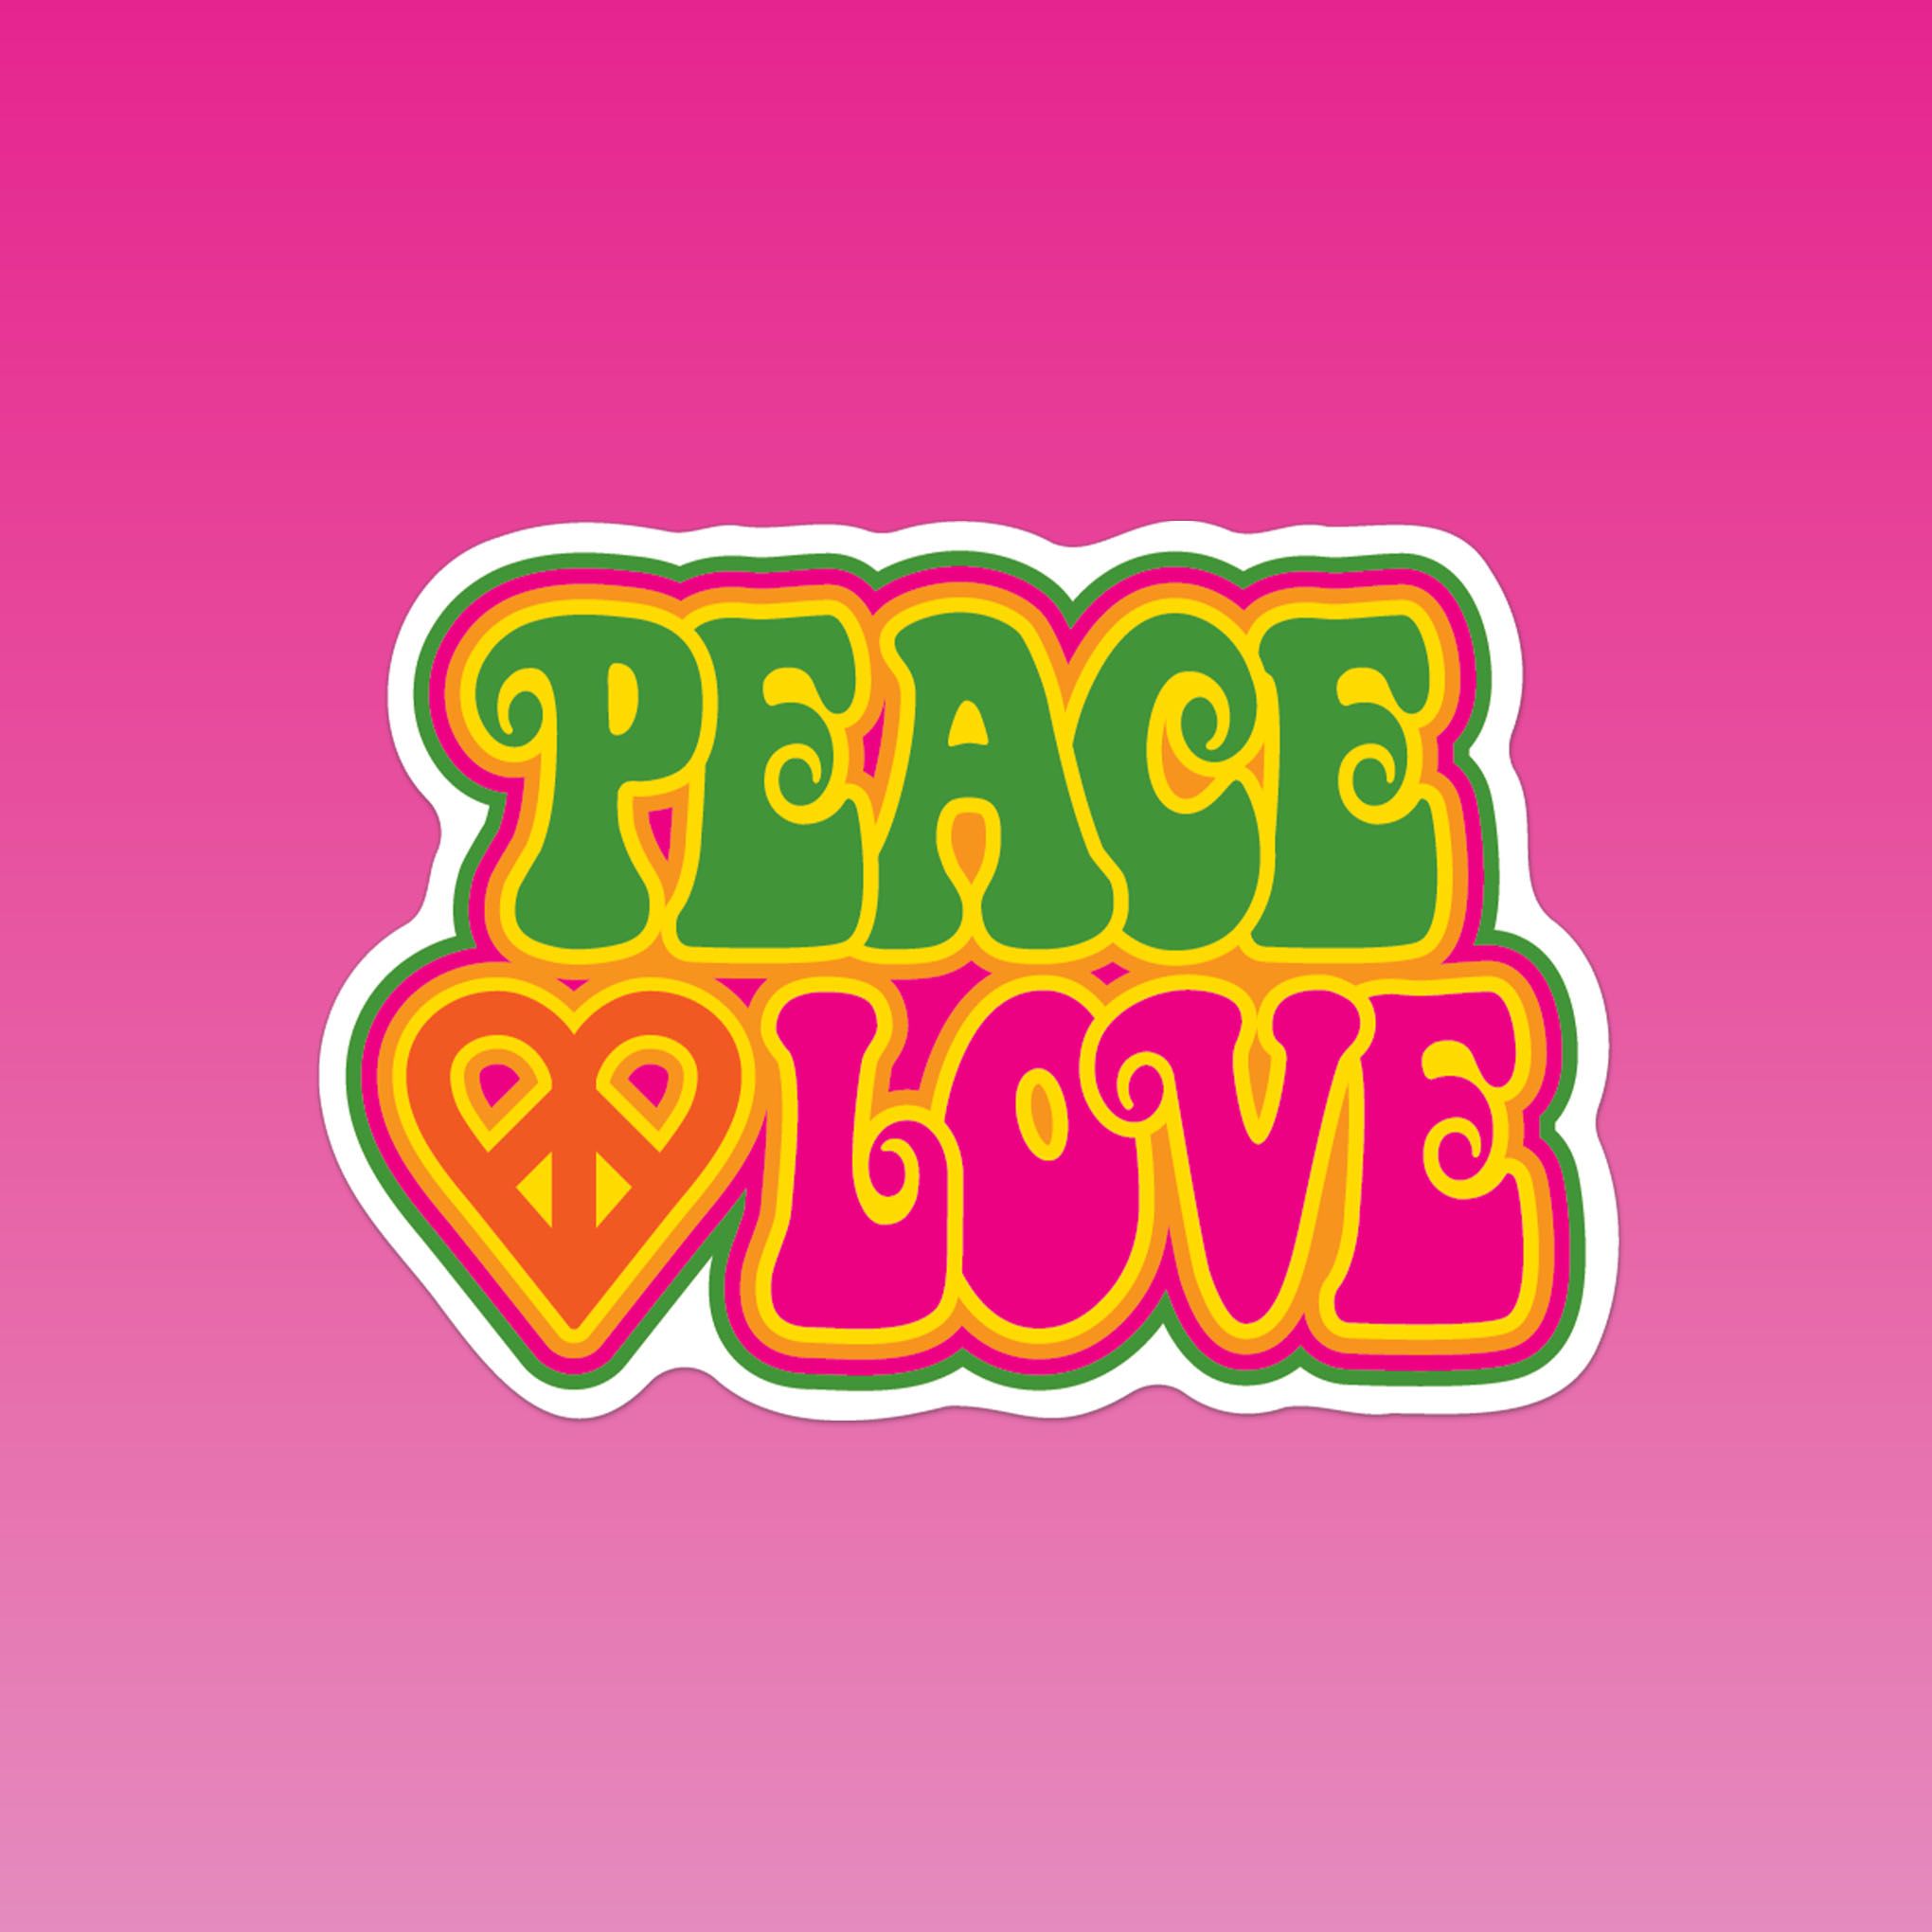 PEACE LOVE 7cm - Sticker Die-cut hình dán cắt rời